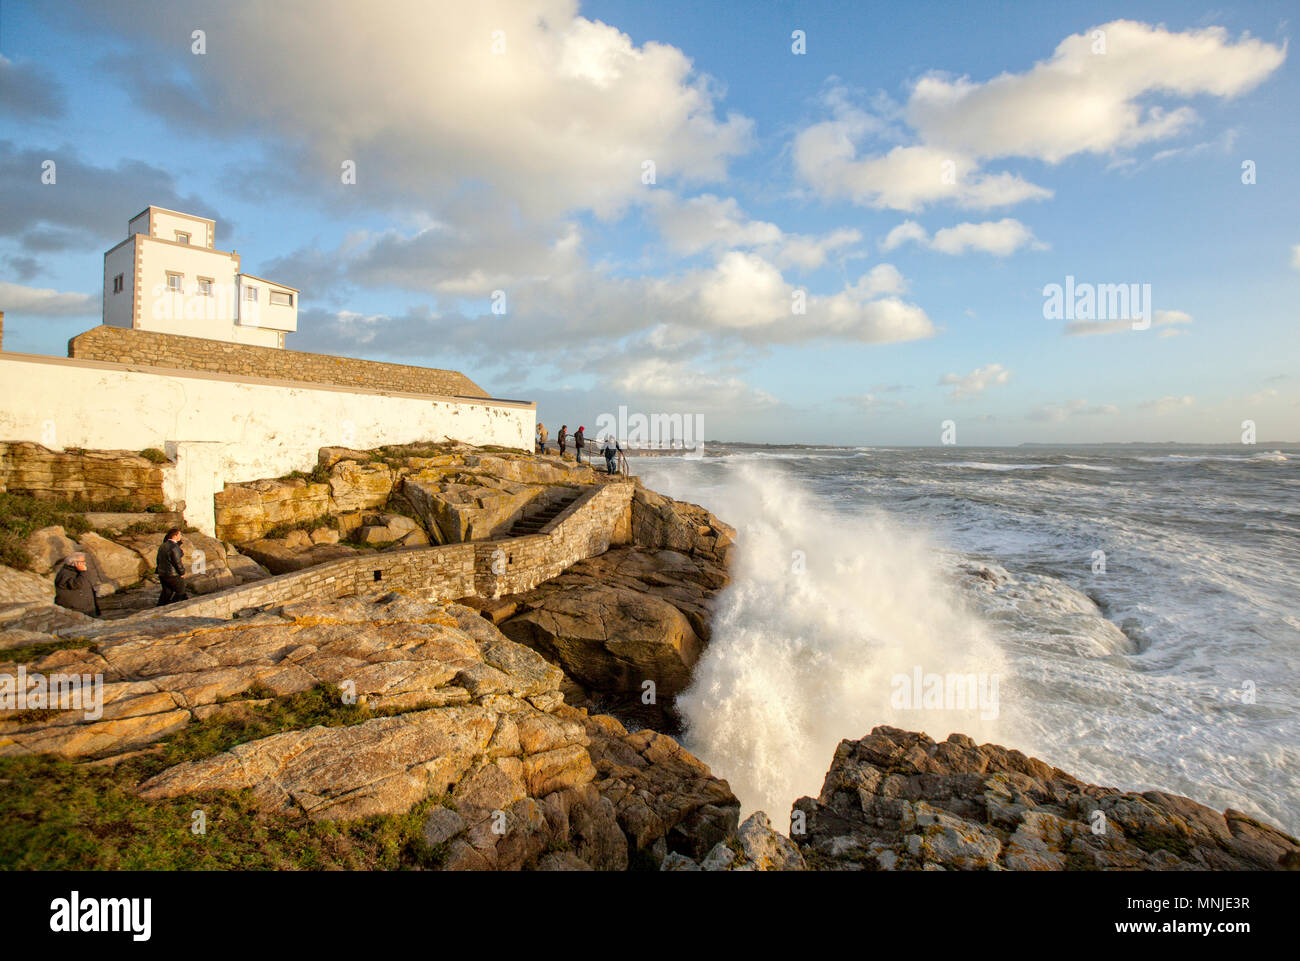 Group of people watching waves splashing on coastal rocks at dusk, Ploemeur, Morbihan, France Stock Photo